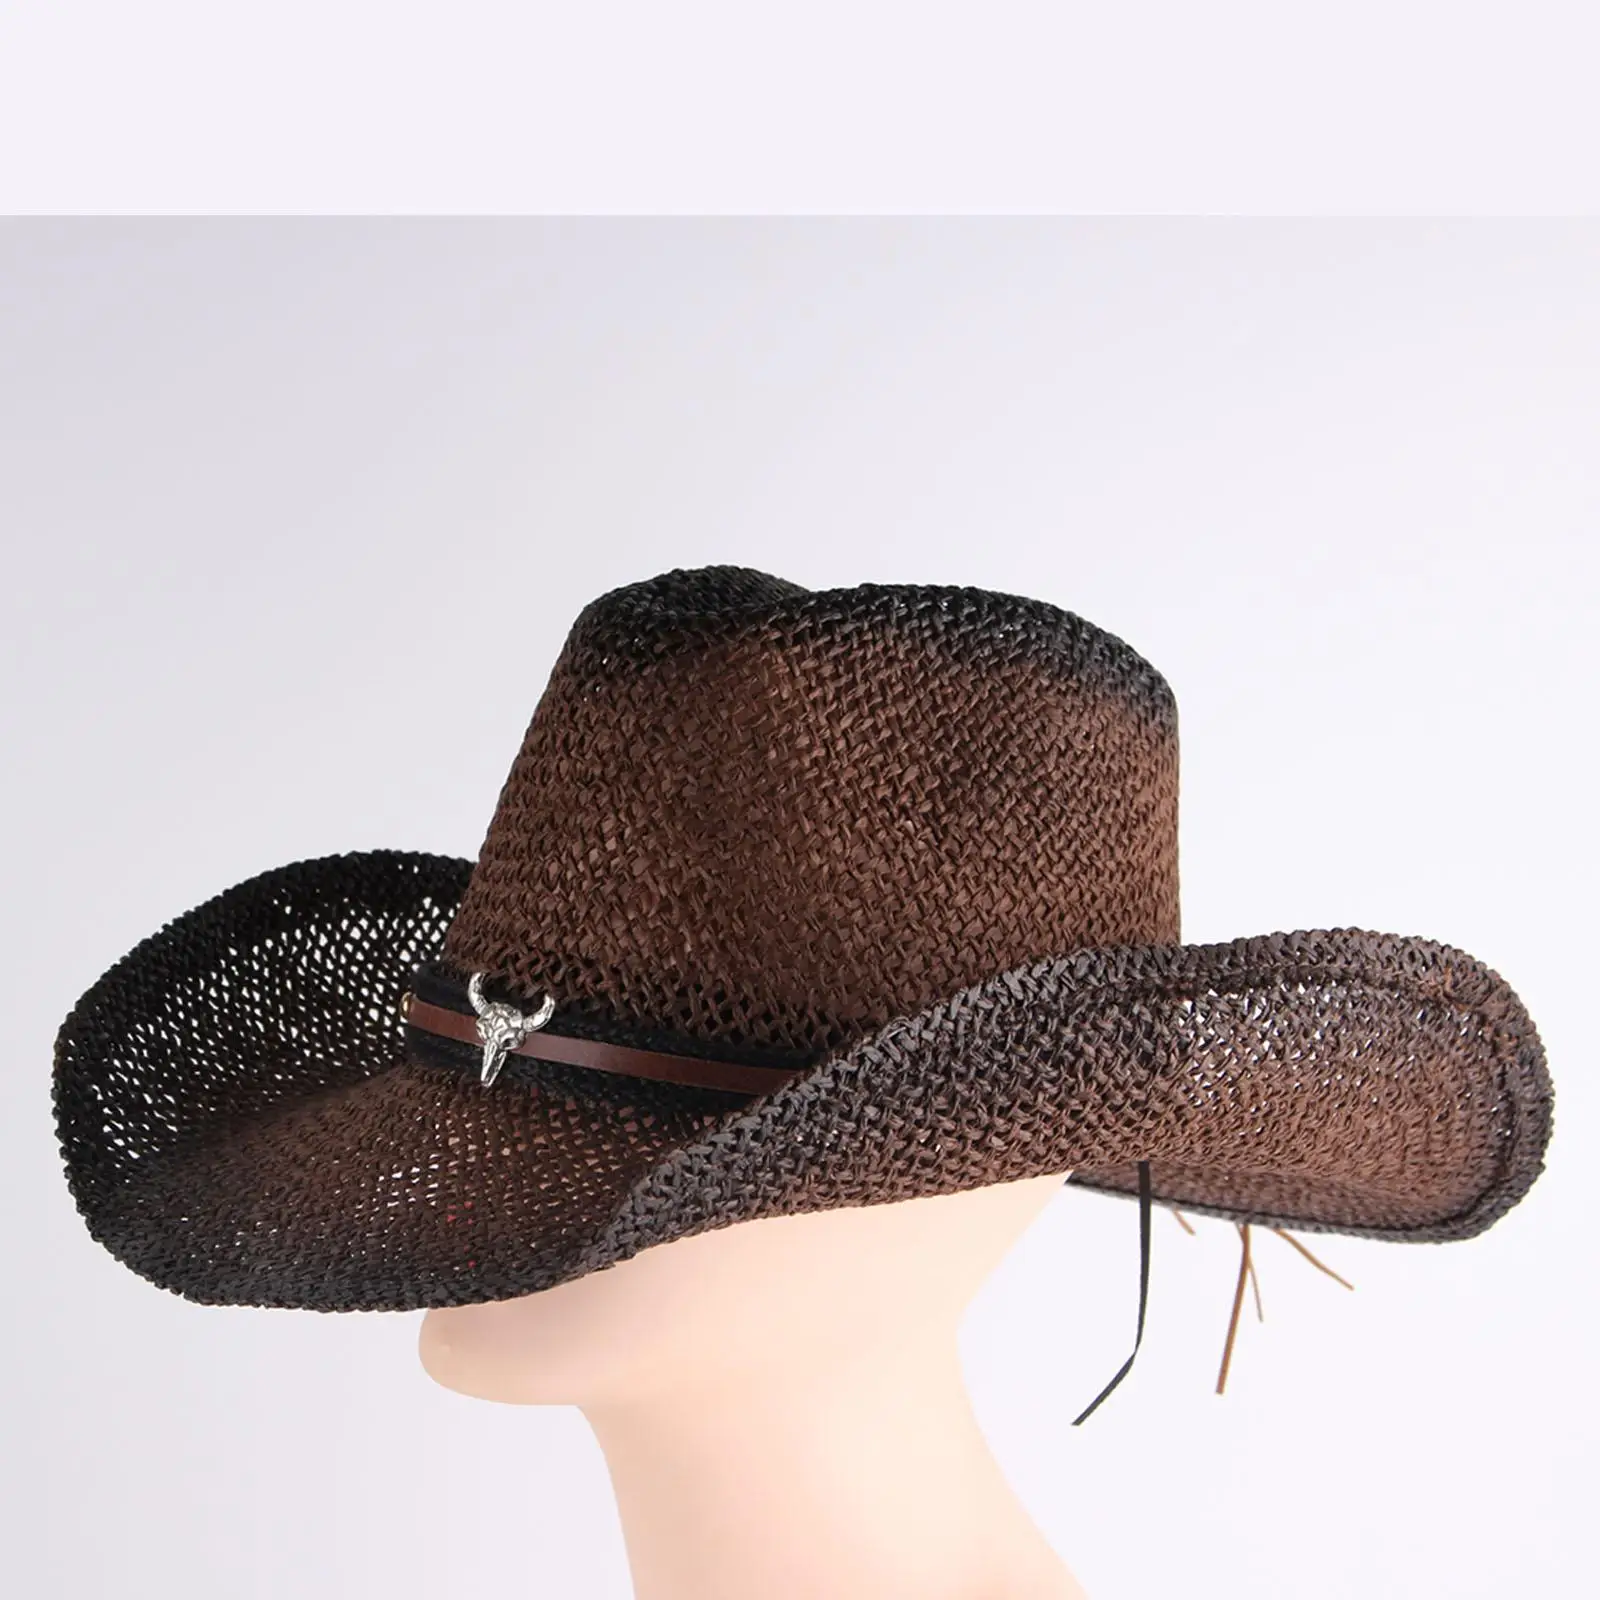 Vintage Straw Cowboy Hat Sombreros Vagueros Shapeable Sun Hat Cowboy Hats for Rodeo Beach travel Horseback Riding